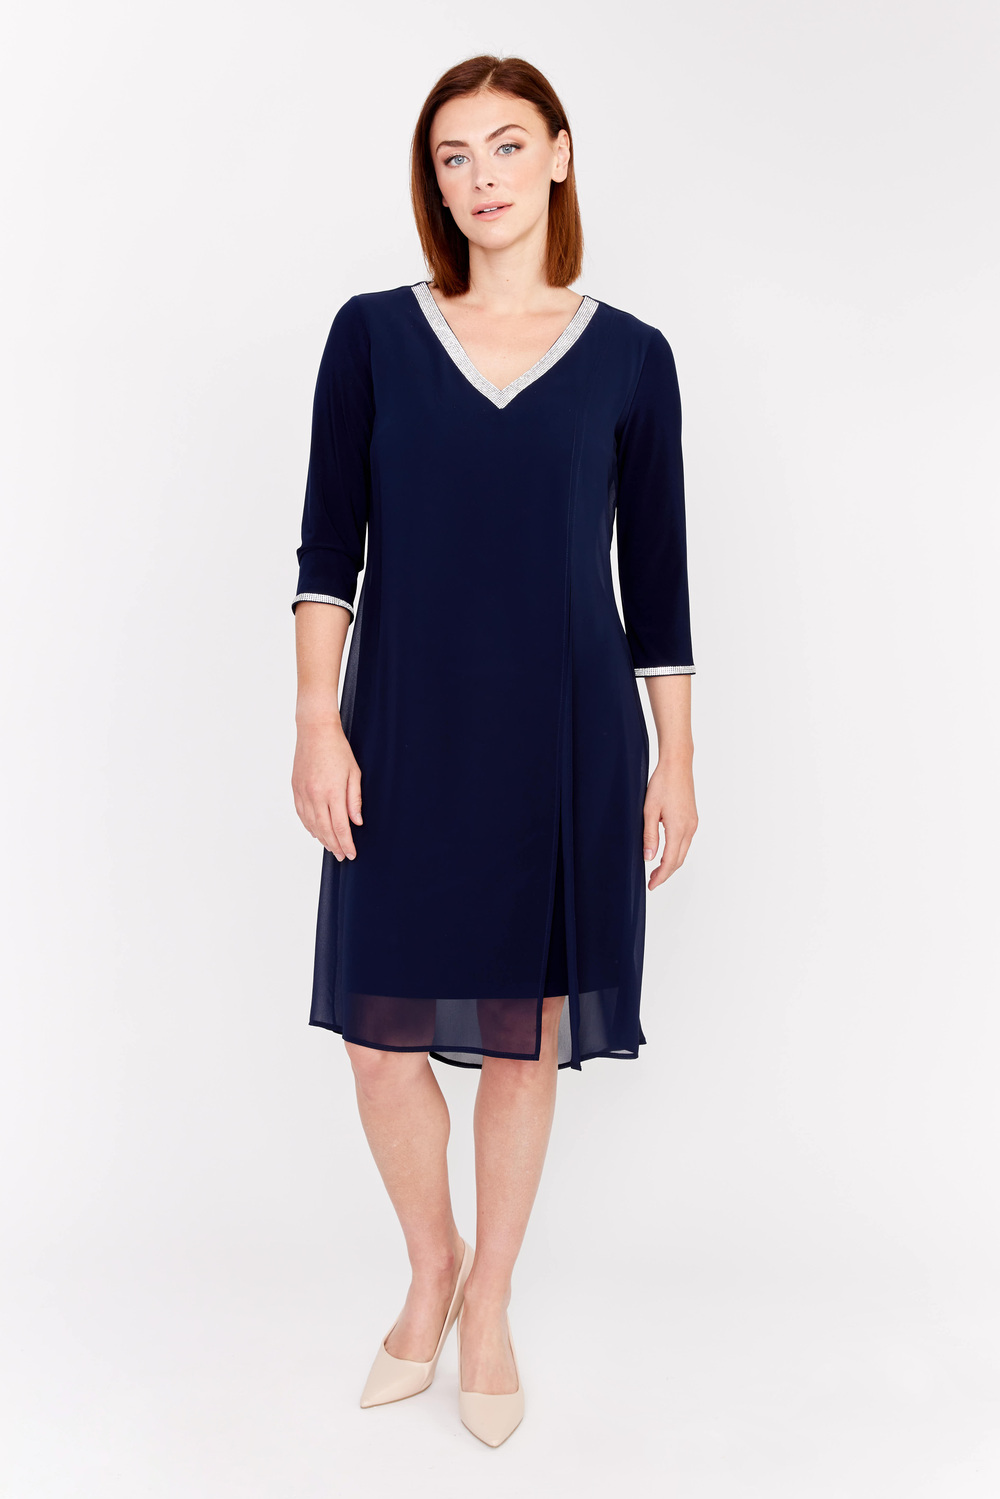 3/4 Sleeve Knit Dress Style 208003. Midnight